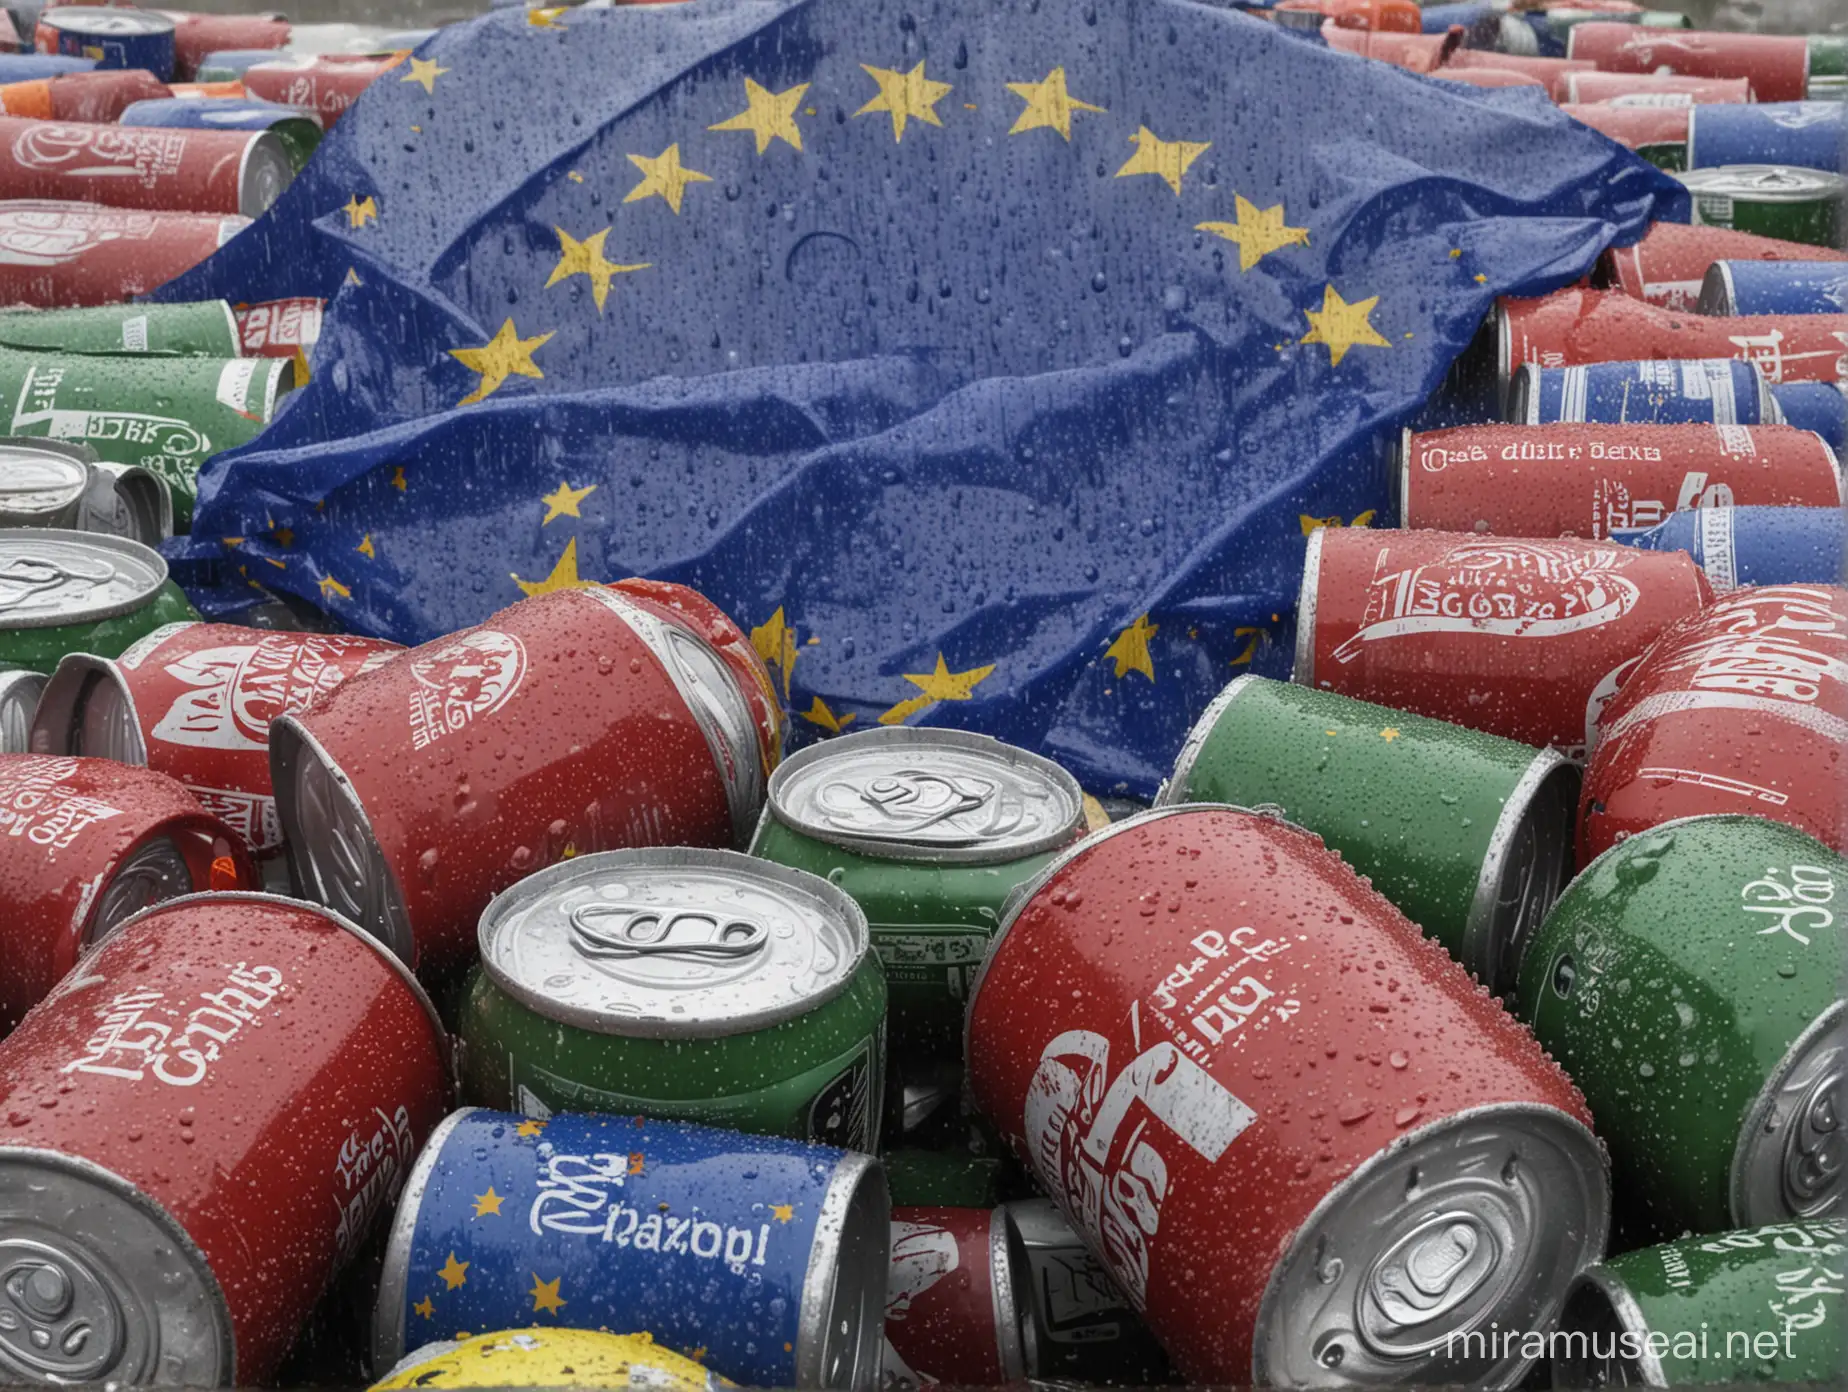 Rainsoaked EU Flag Amidst Discarded Soda Cans